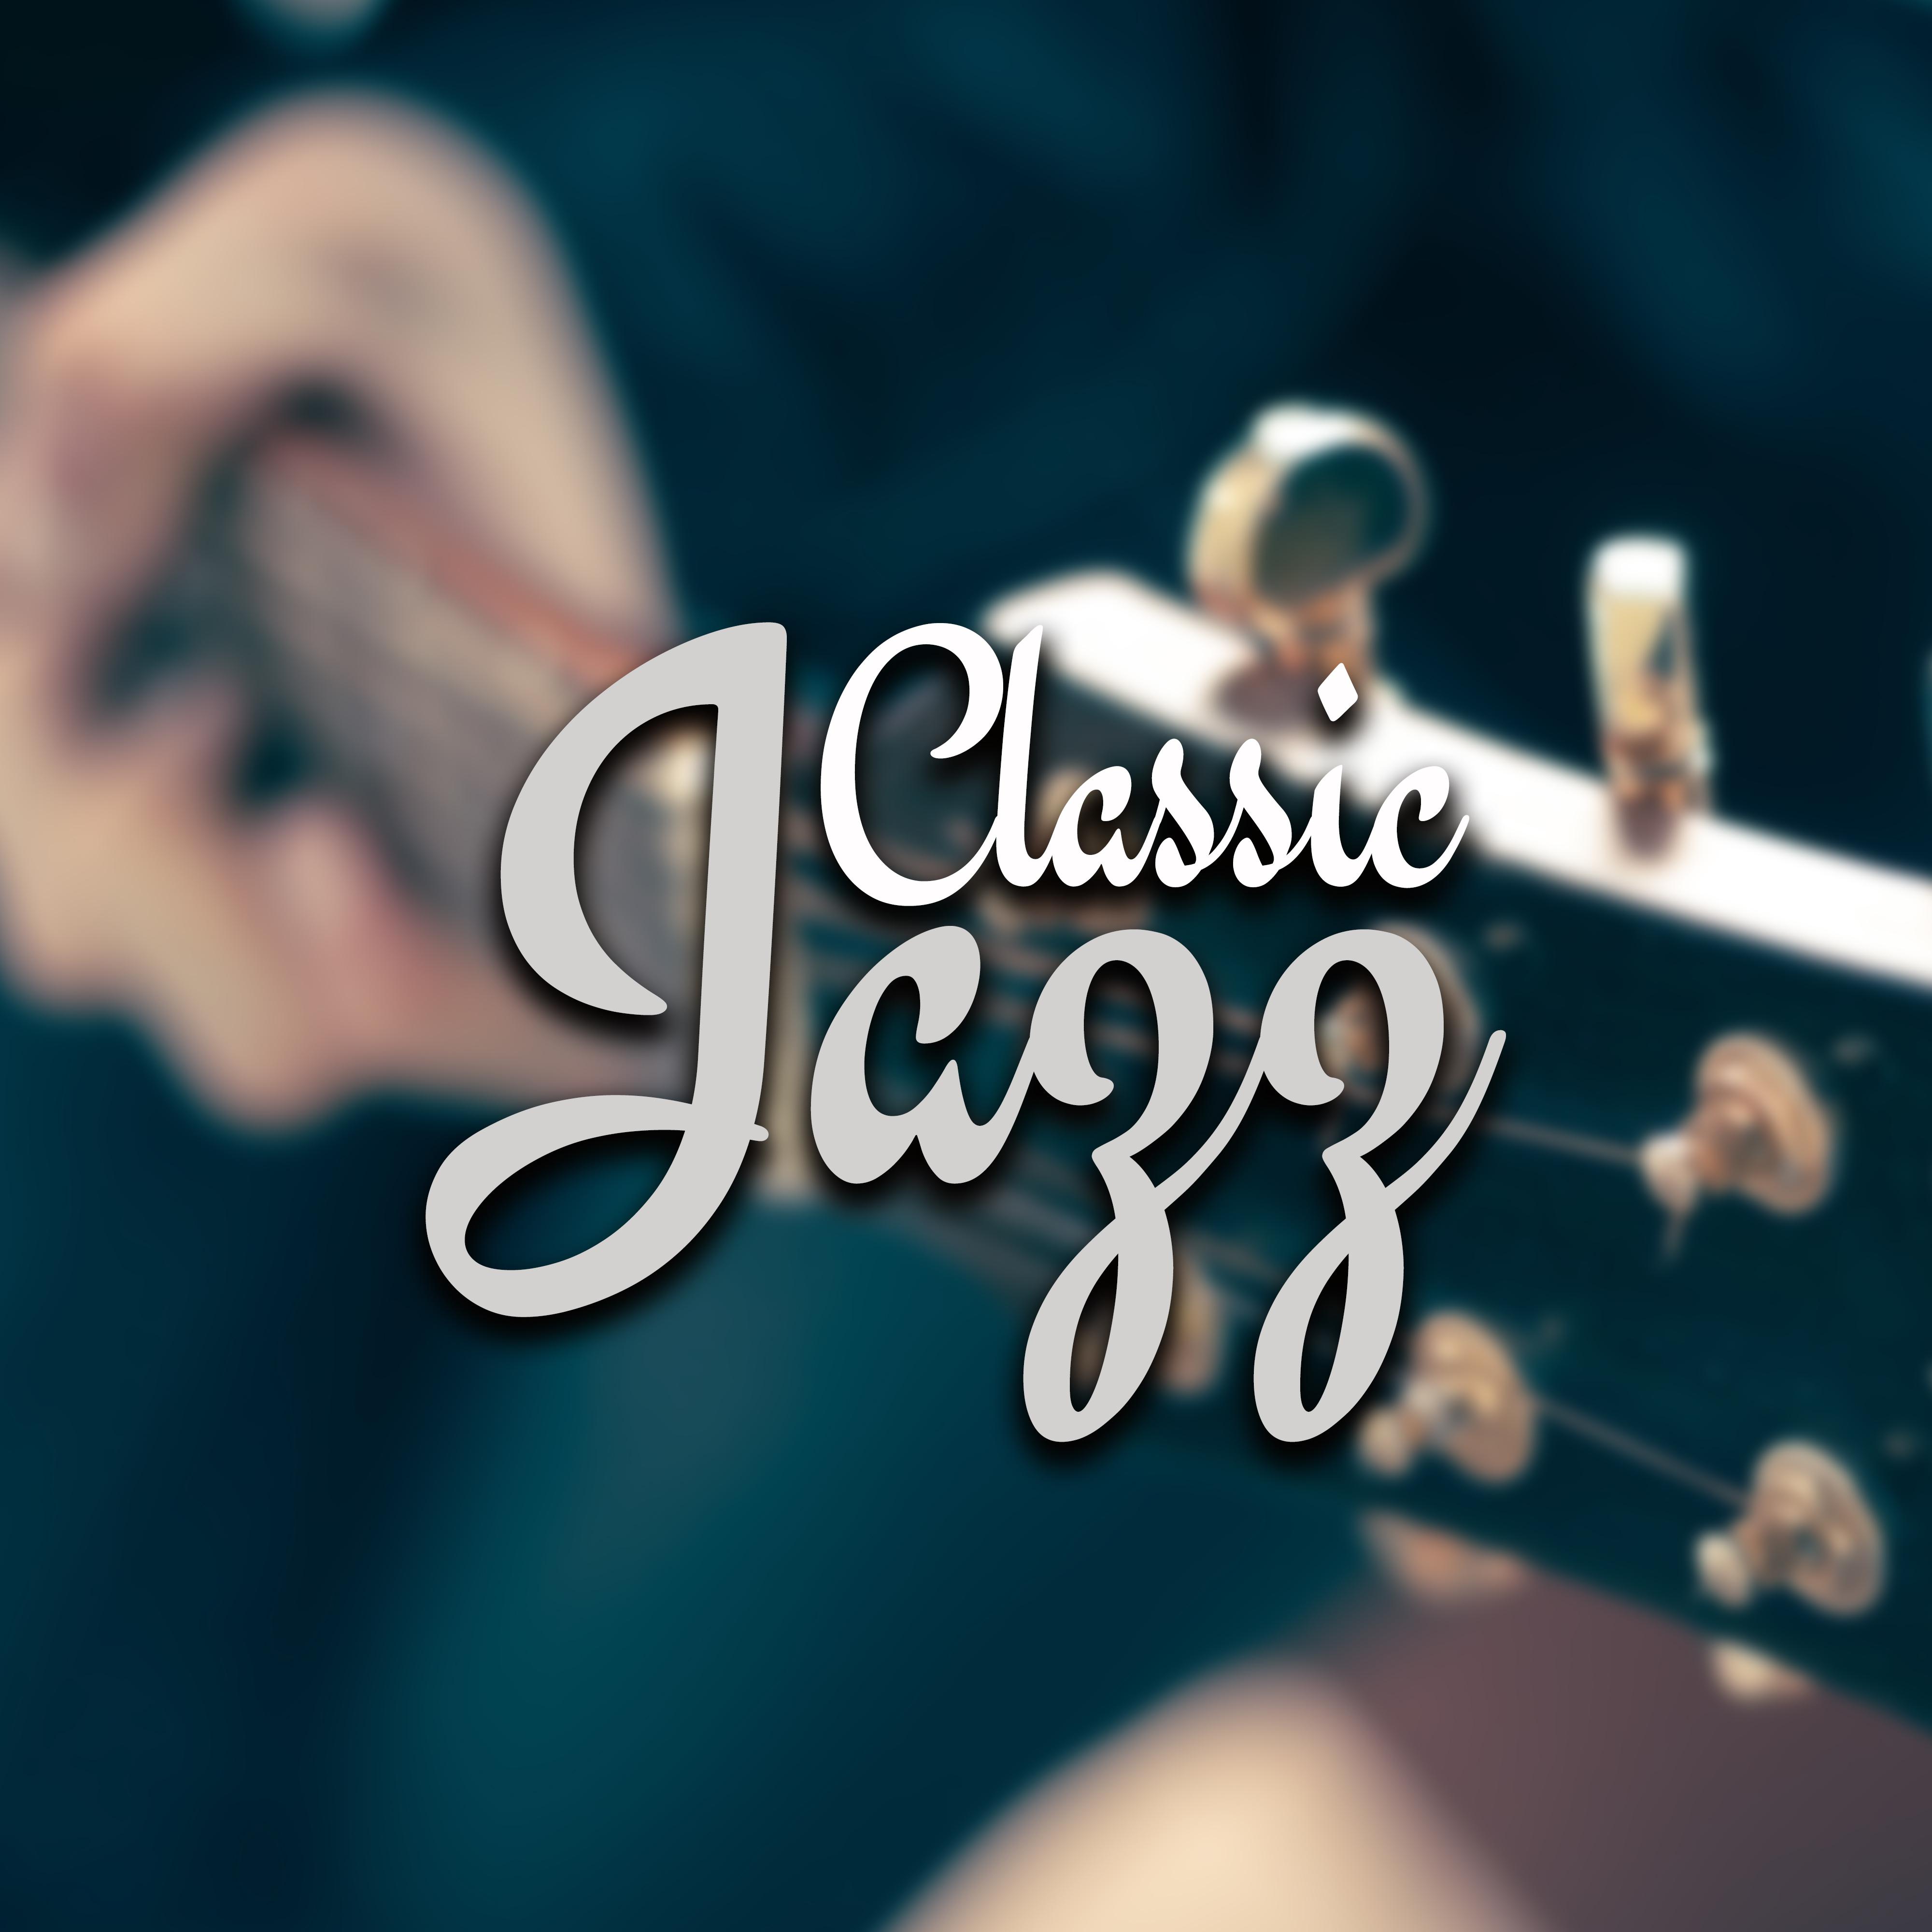 Classic Jazz – Piano Relaxation, Guitar Jazz, Peaceful Mind, Soft Jazz After Work